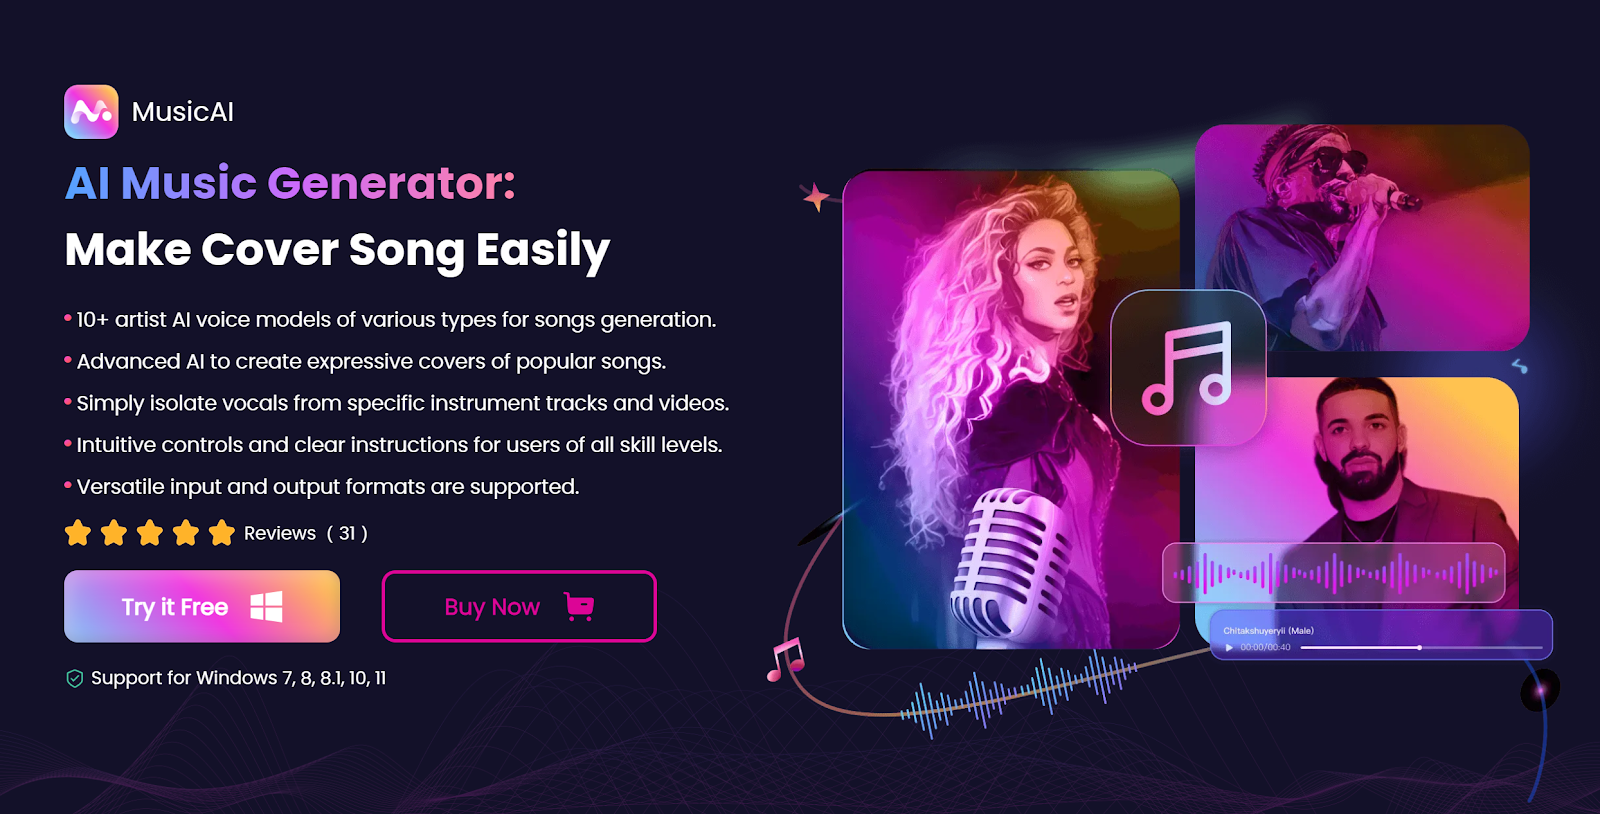 The MusicAI homepage.